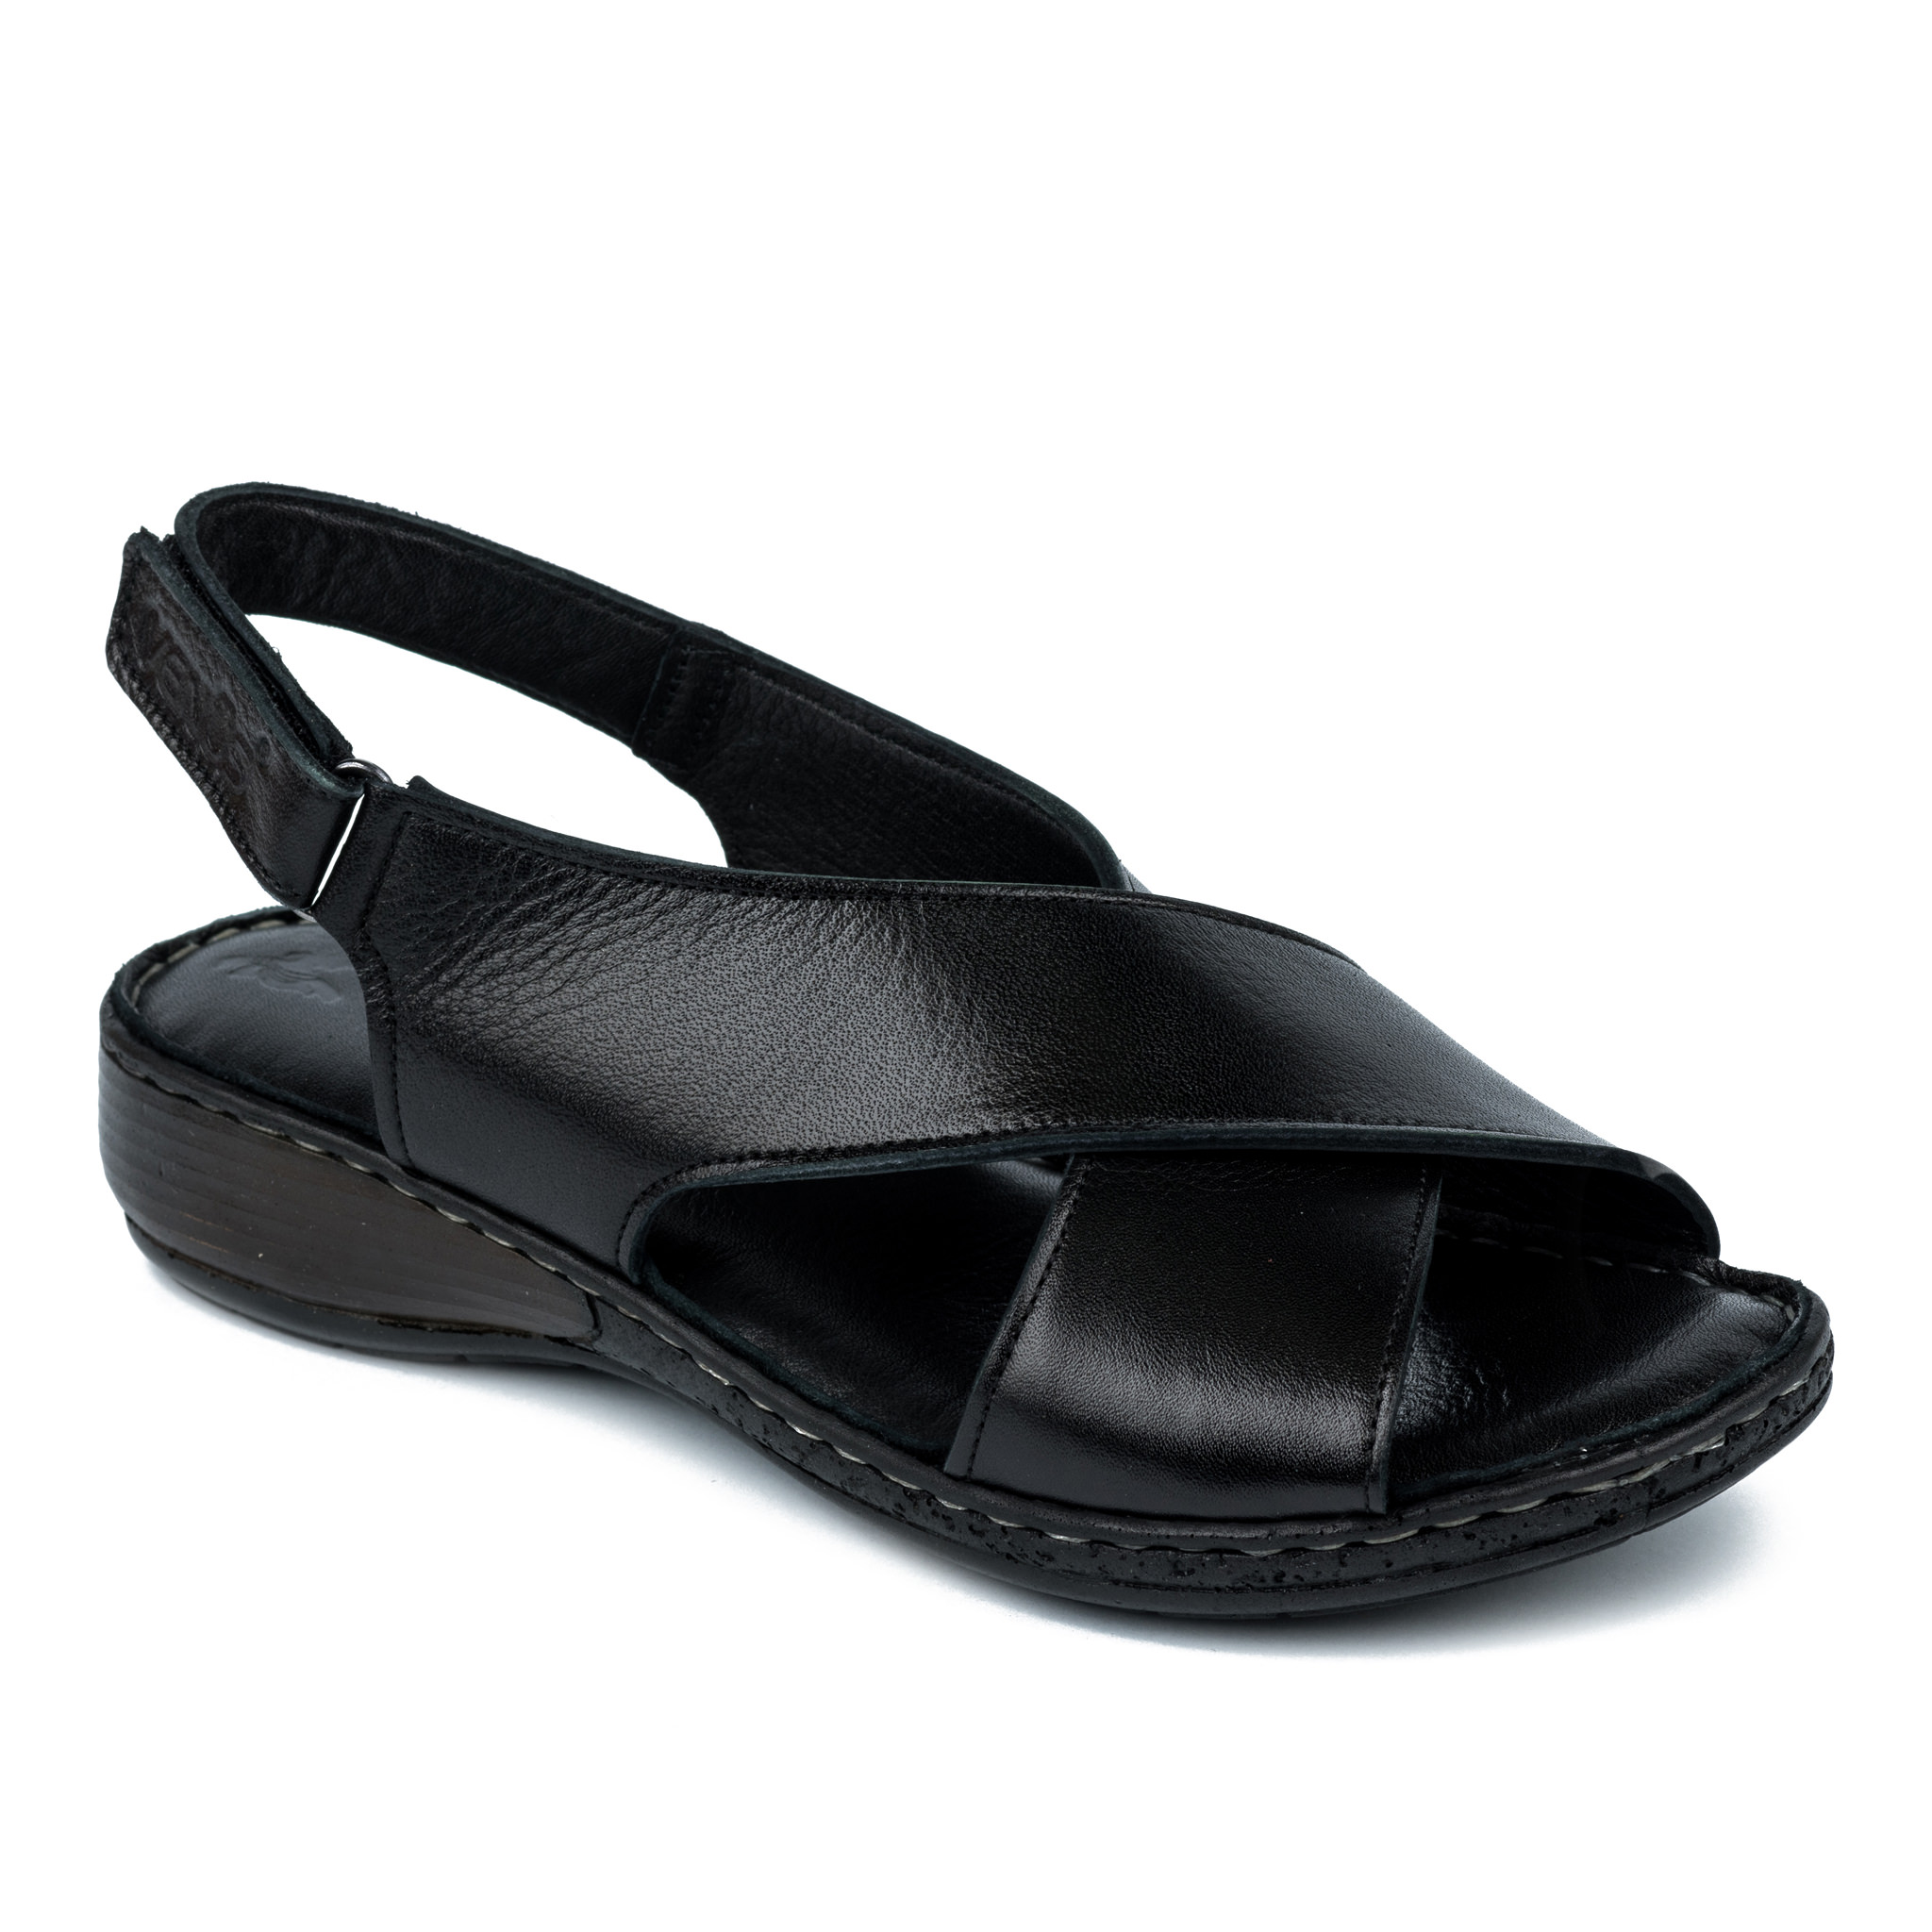 Women sandals A229 - BLACK